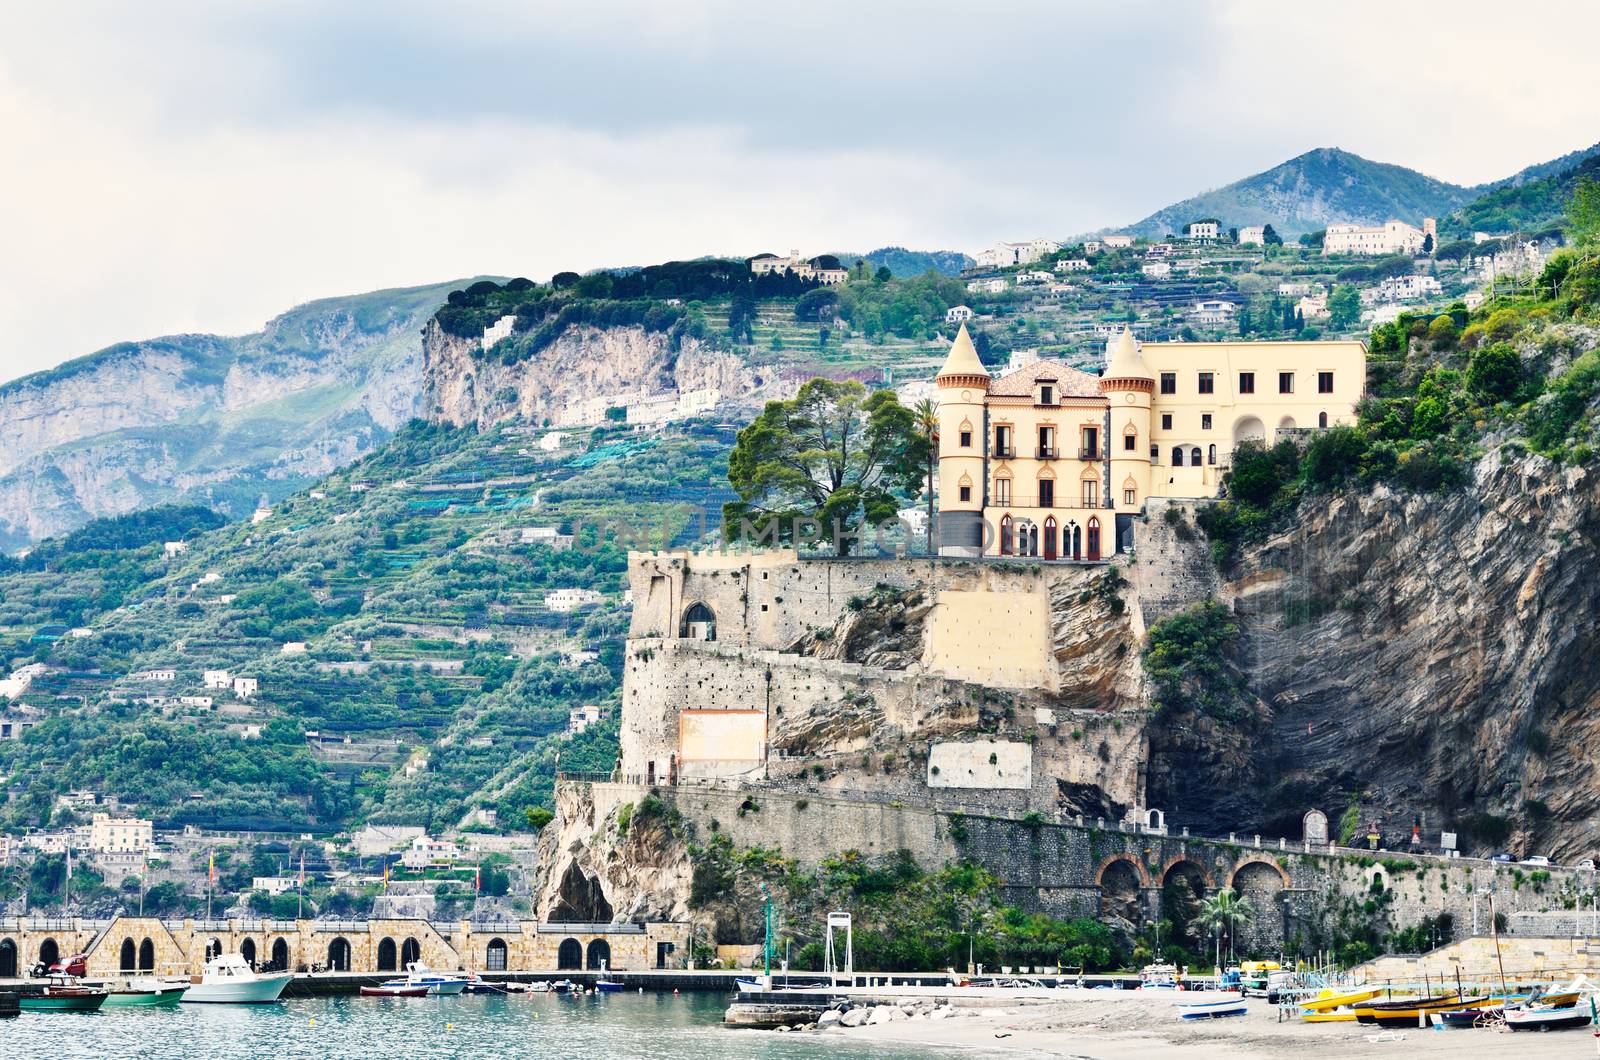 Amalfi coast, Italy by styf22